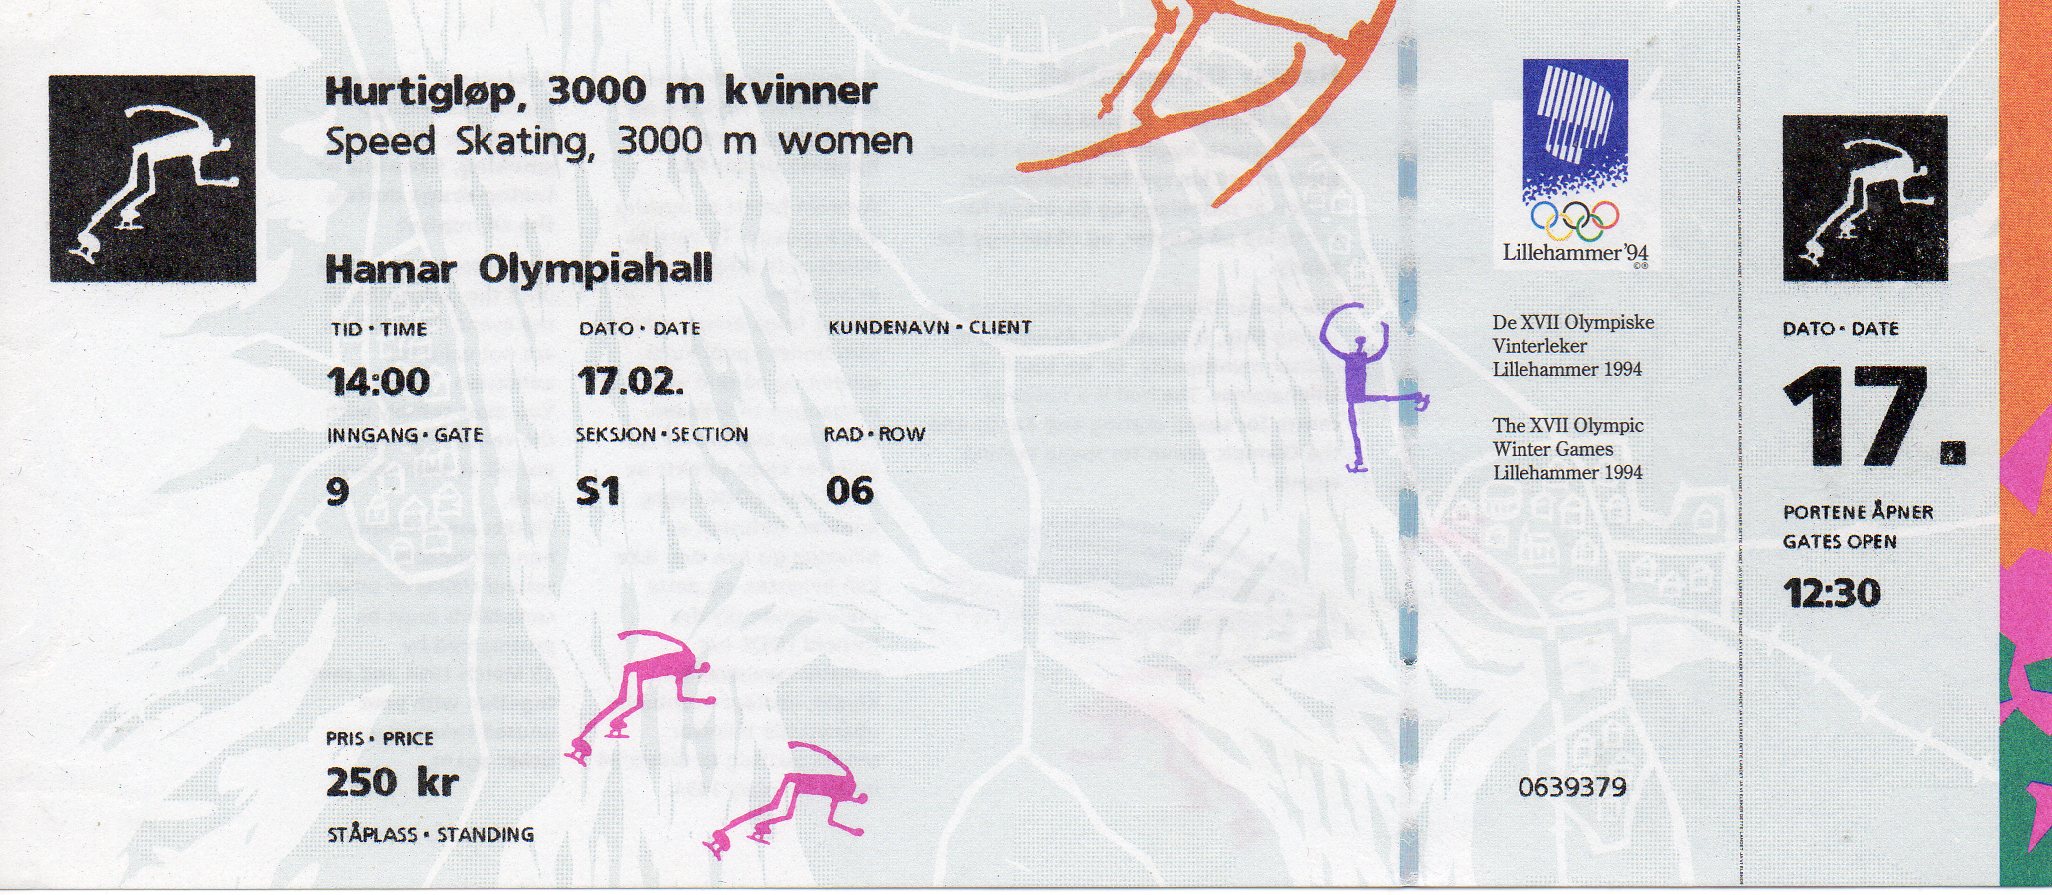 Ticket - Speed skating 3000 m women